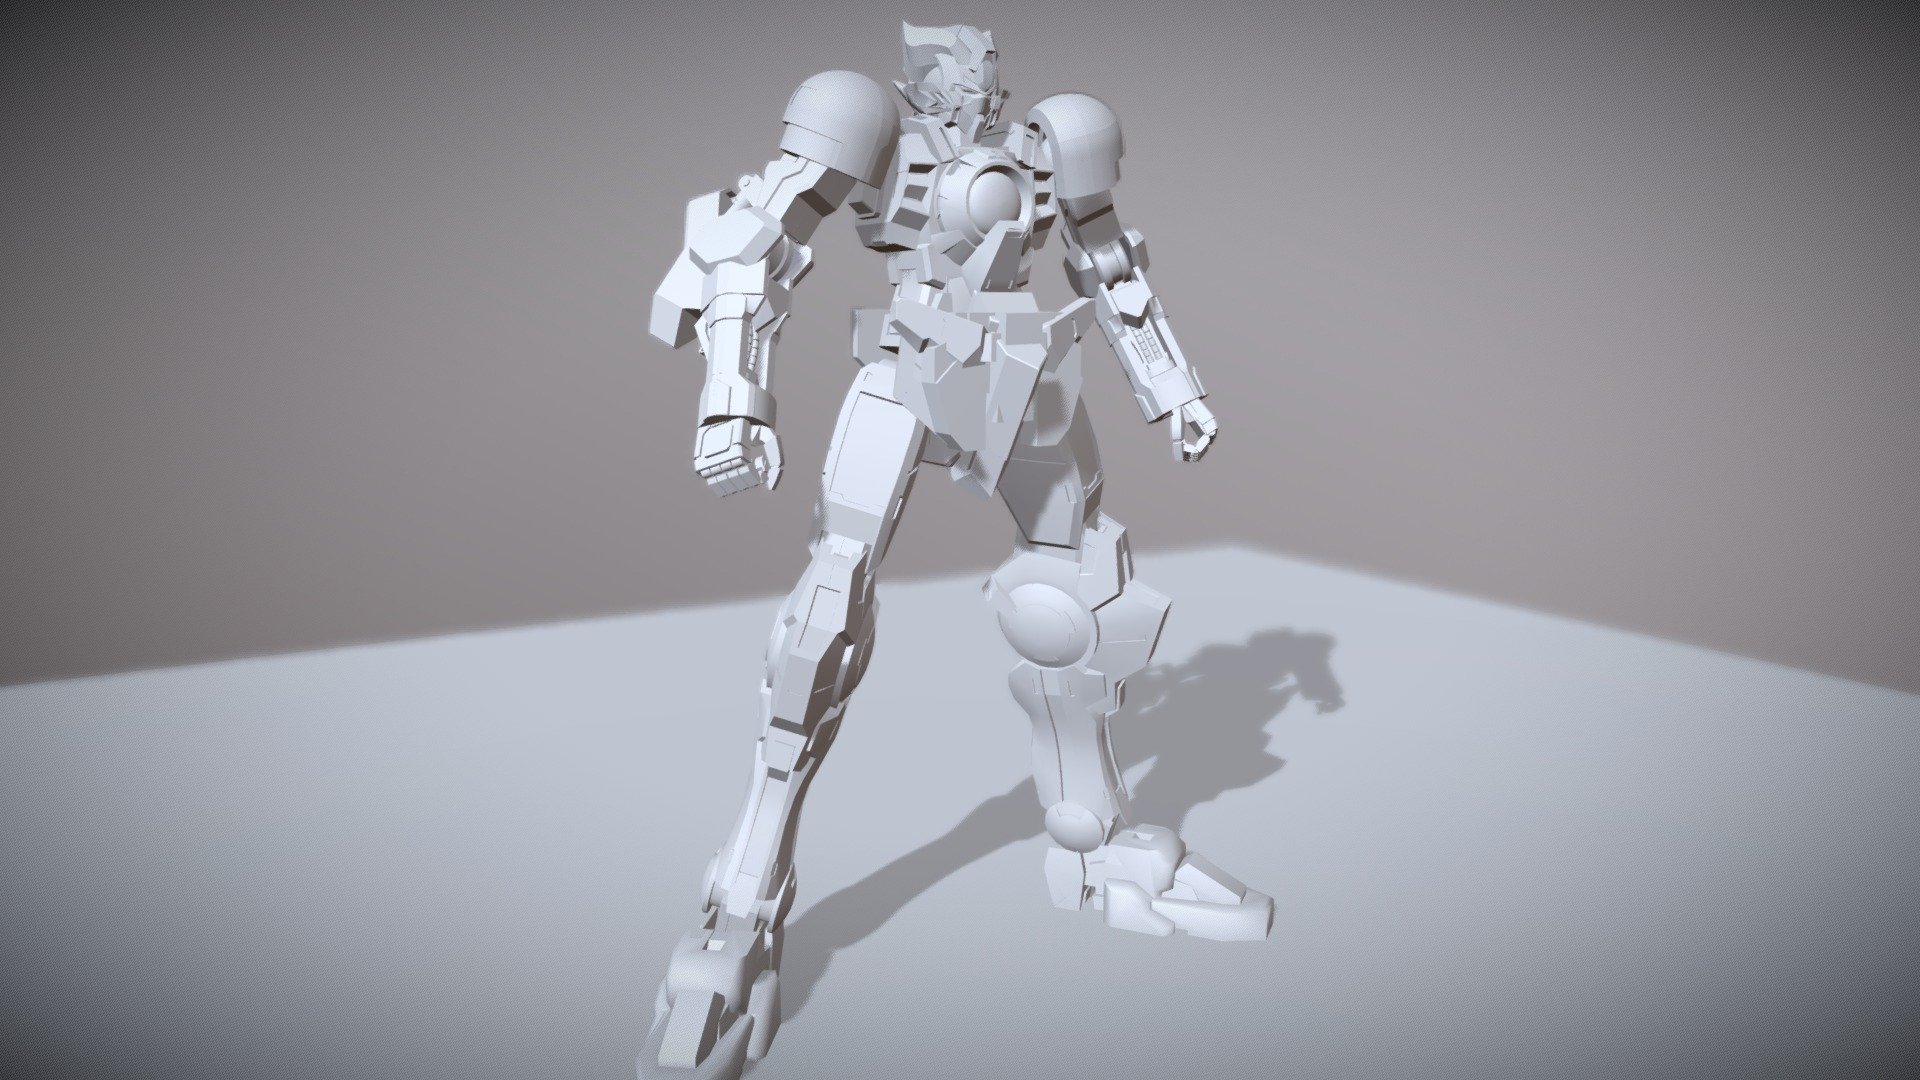 GUNDAM 13 Boar - 3D model by krit yamsaso (กฤษณ์ แย้มสระโส) (@krit_yamsaso) 3d model